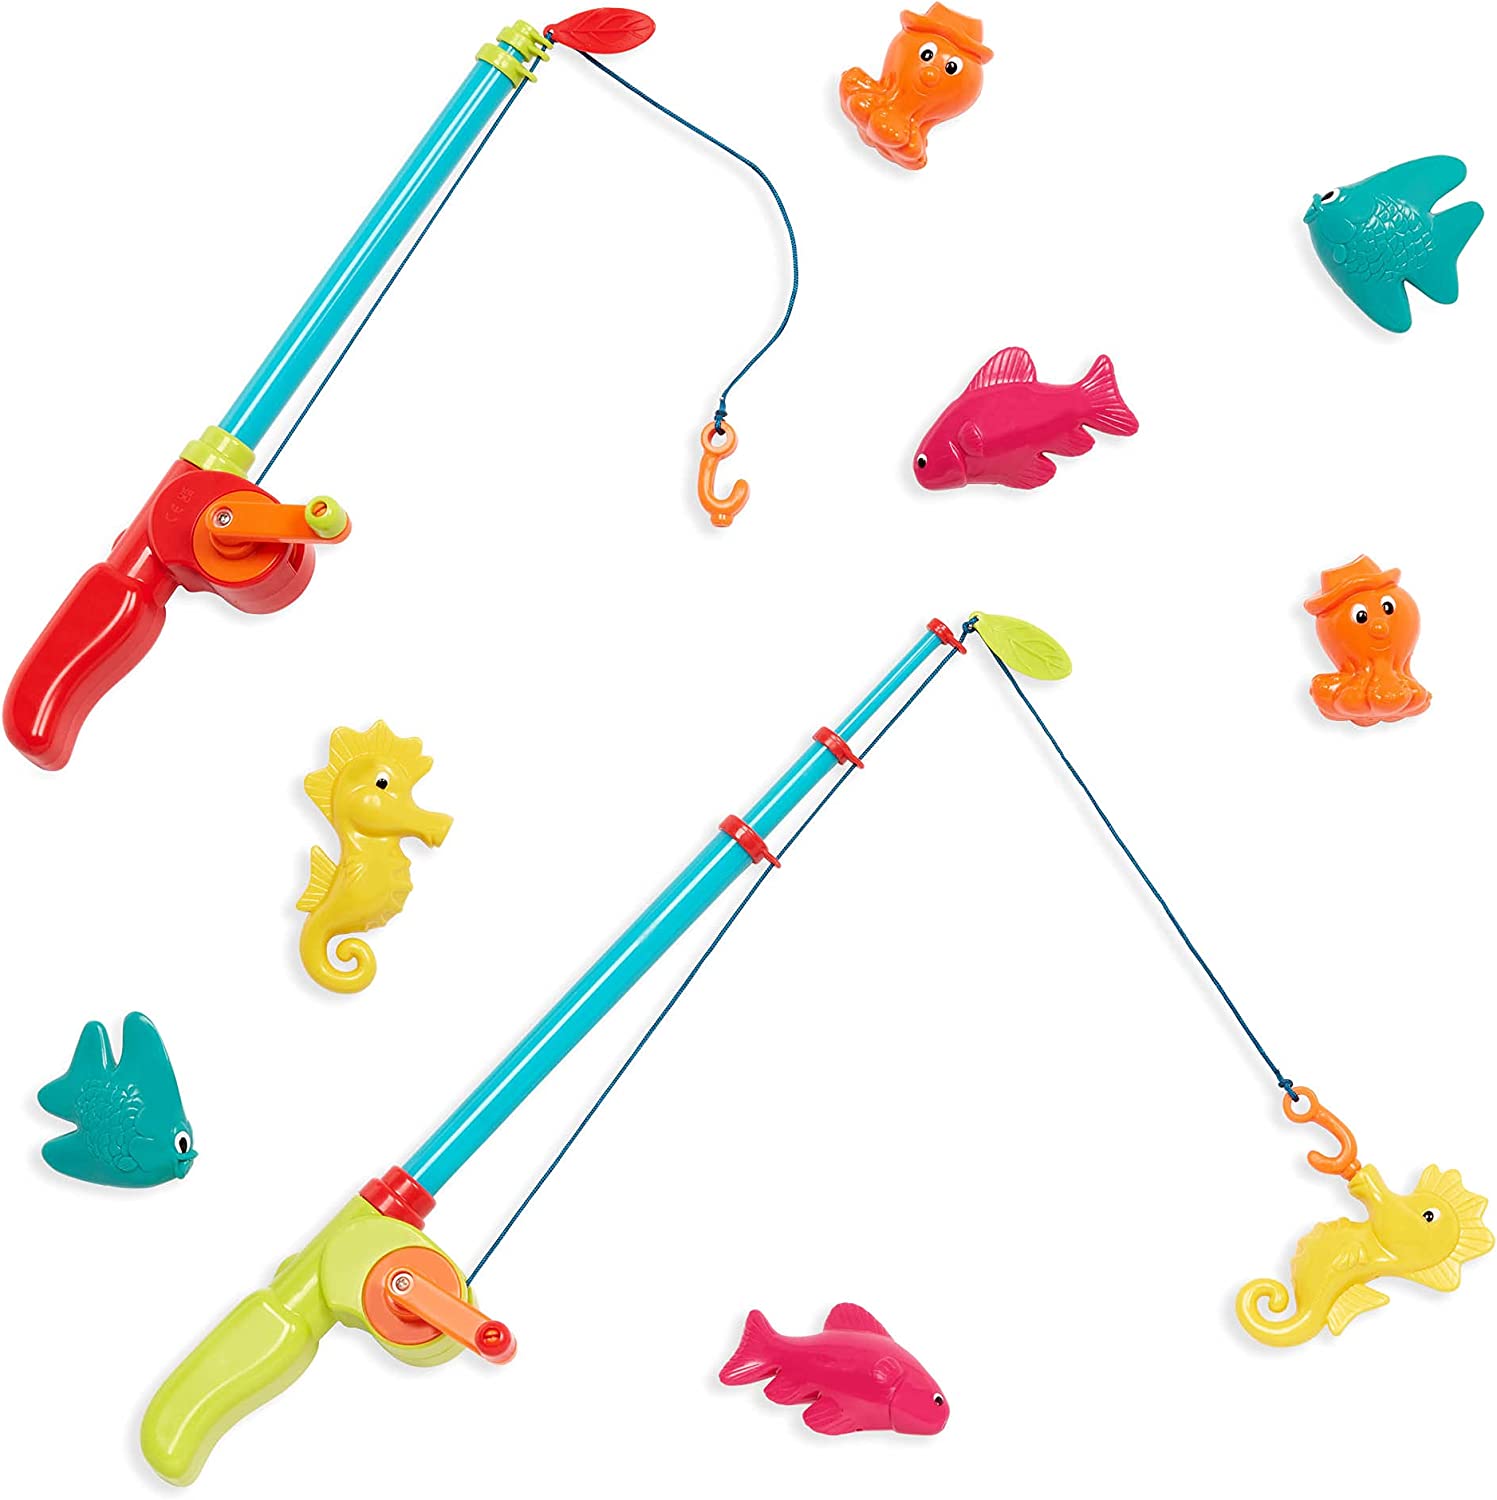 Fishing Game For Kids WholeSale - Price List, Bulk Buy at